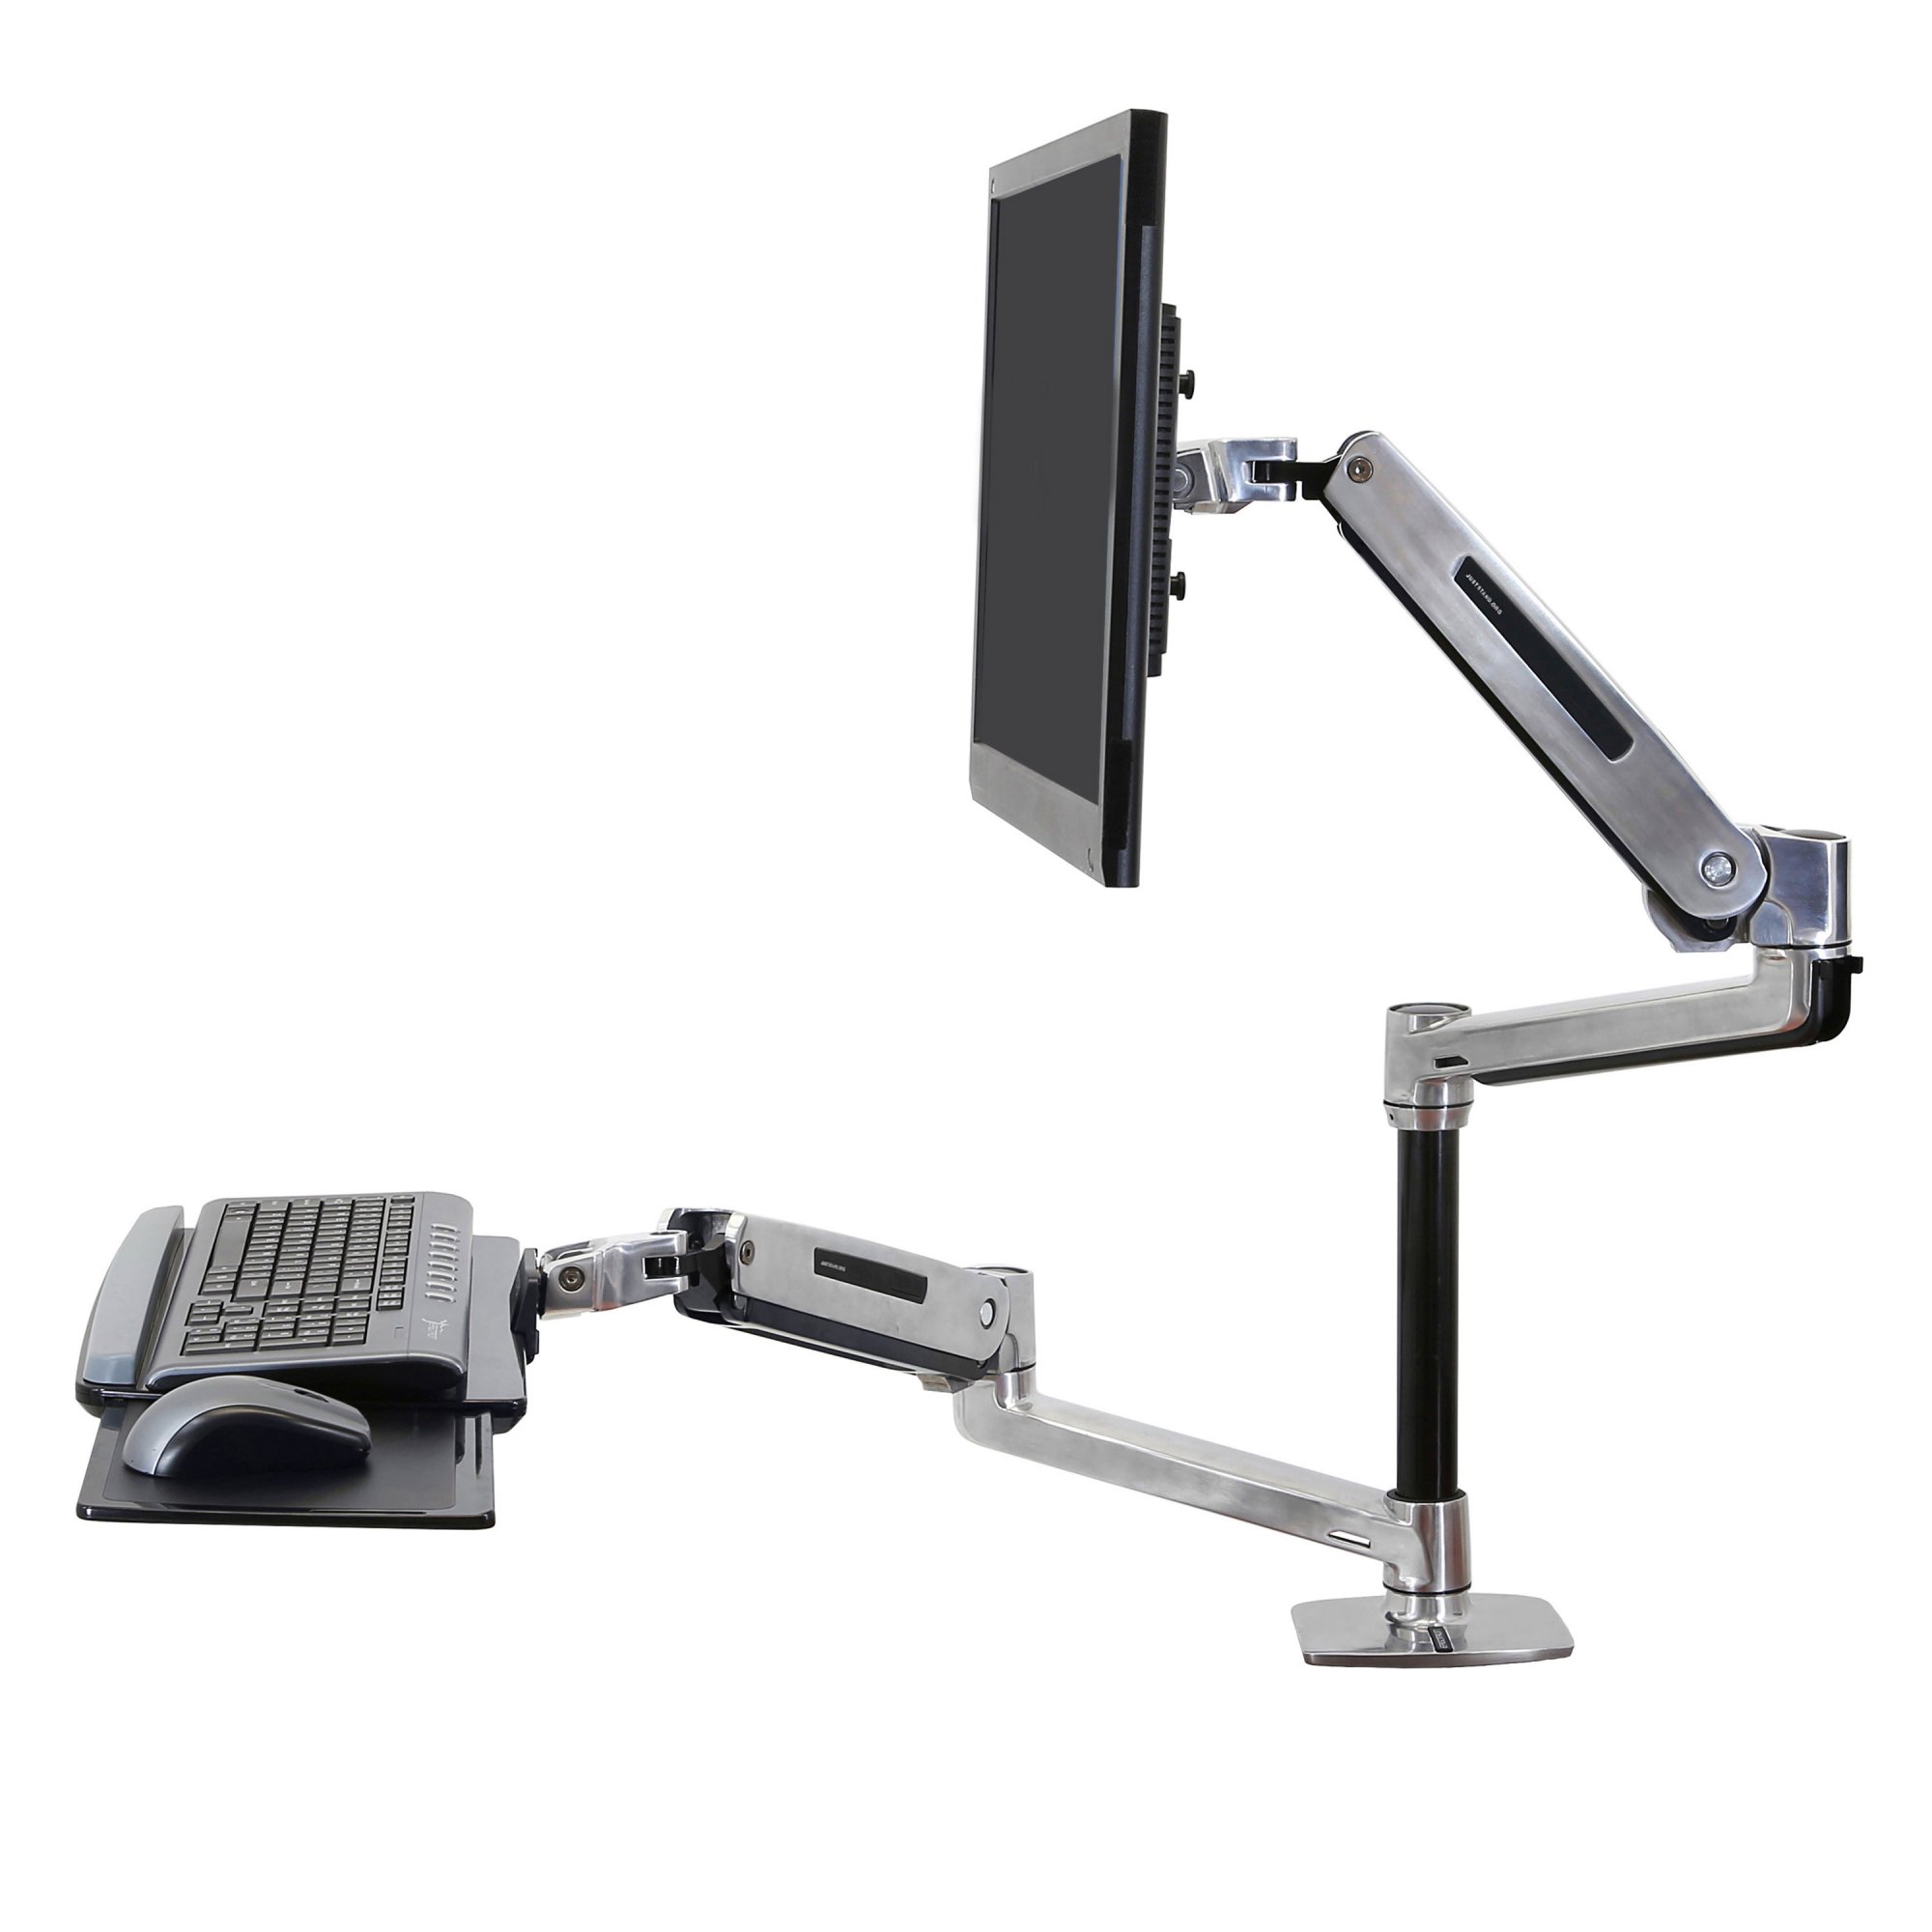 Ergotron 45-405-026 WorkFit-LX Sit-Stand Desk Mount System